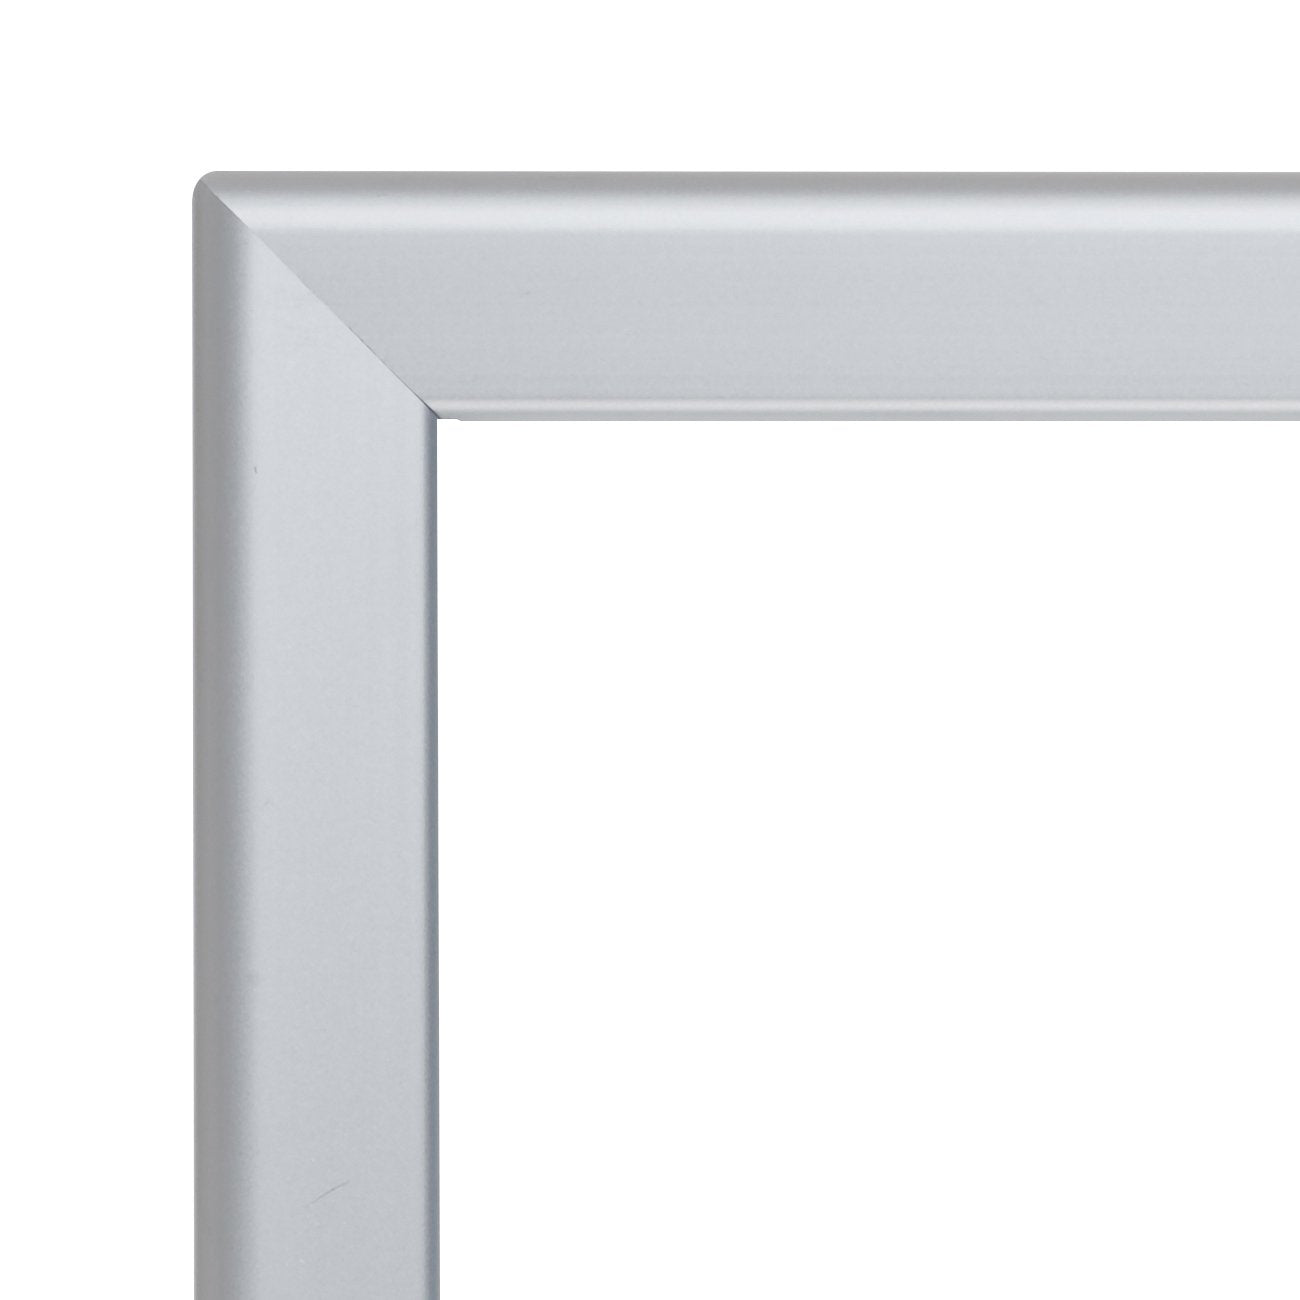 Snap Frame, matt Silver, 32 mm Profile, Posterframe Silver, Aluminium Frame  Silver